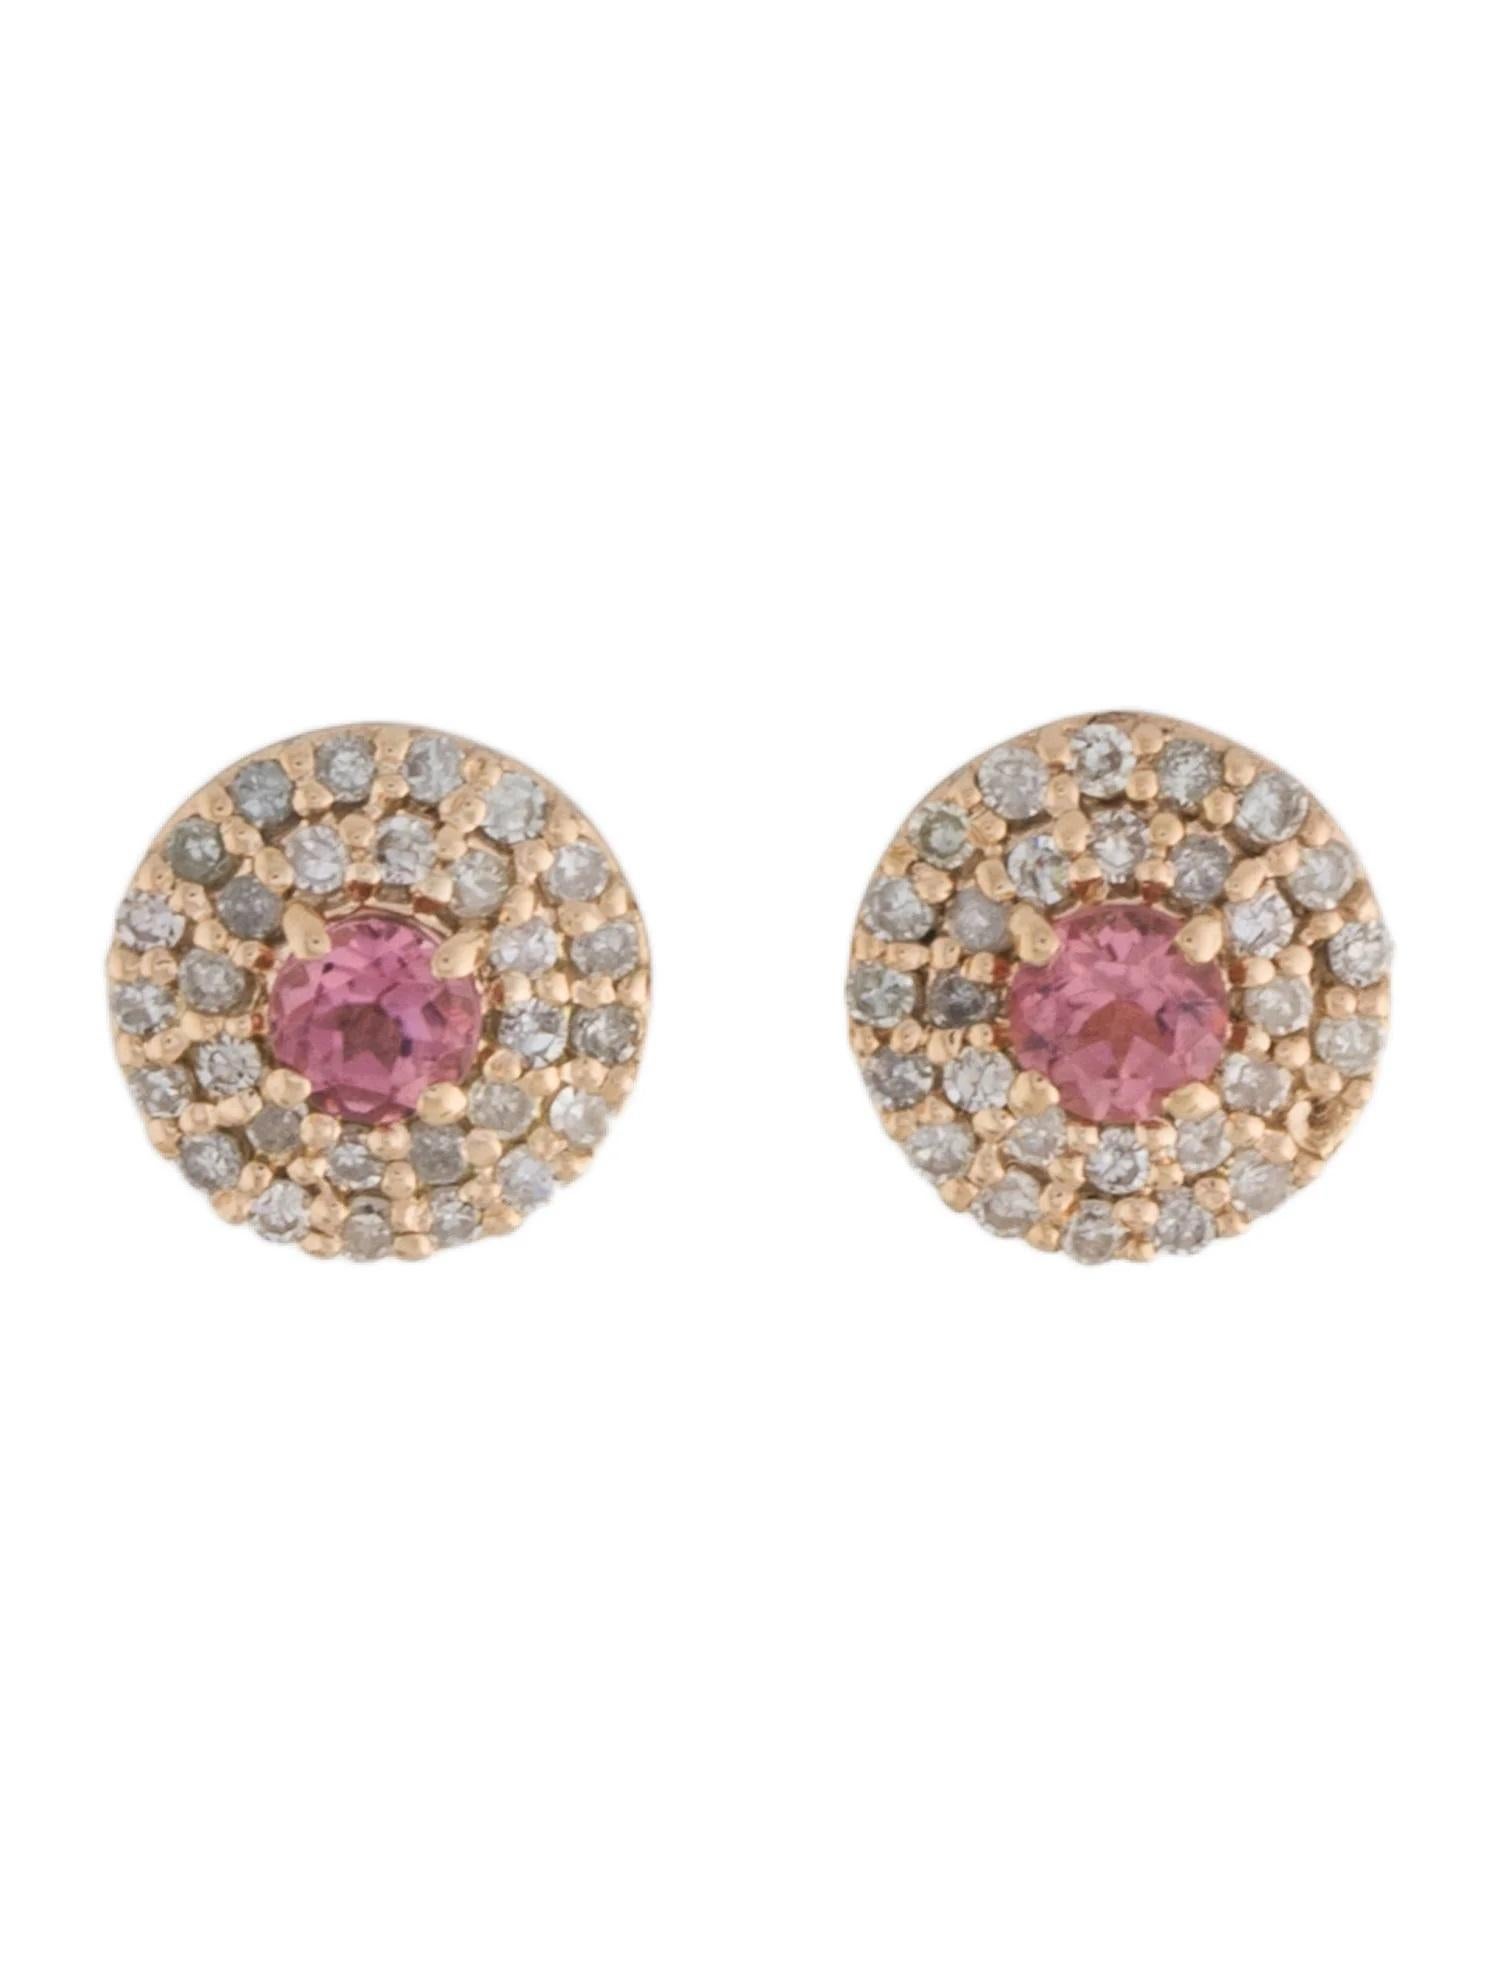 Round Cut 14K Tourmaline & Diamond Stud Earrings - Pink Tourmaline, Single Cut Diamonds For Sale